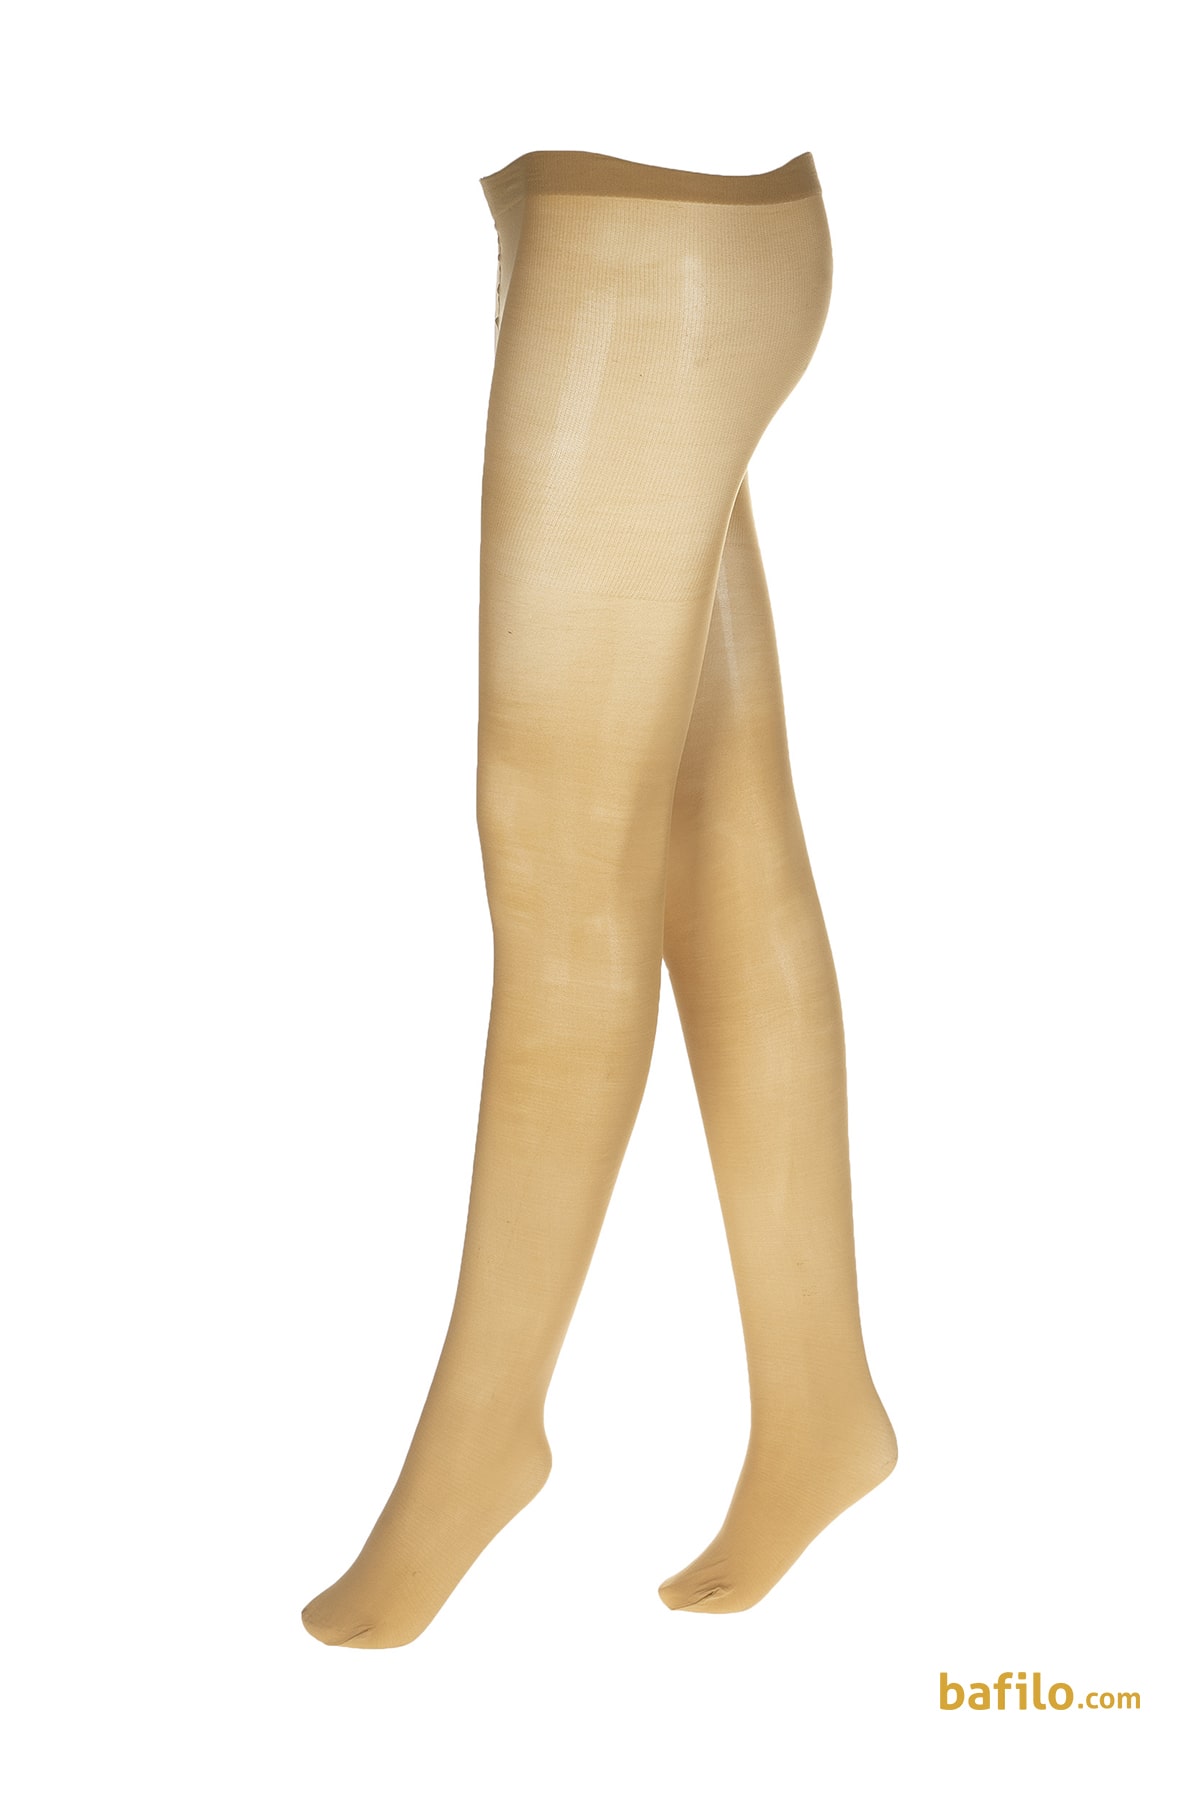 جوراب شلواری زنانه ایتالیانا Mikro 40 رنگ بدن - Thumbnail